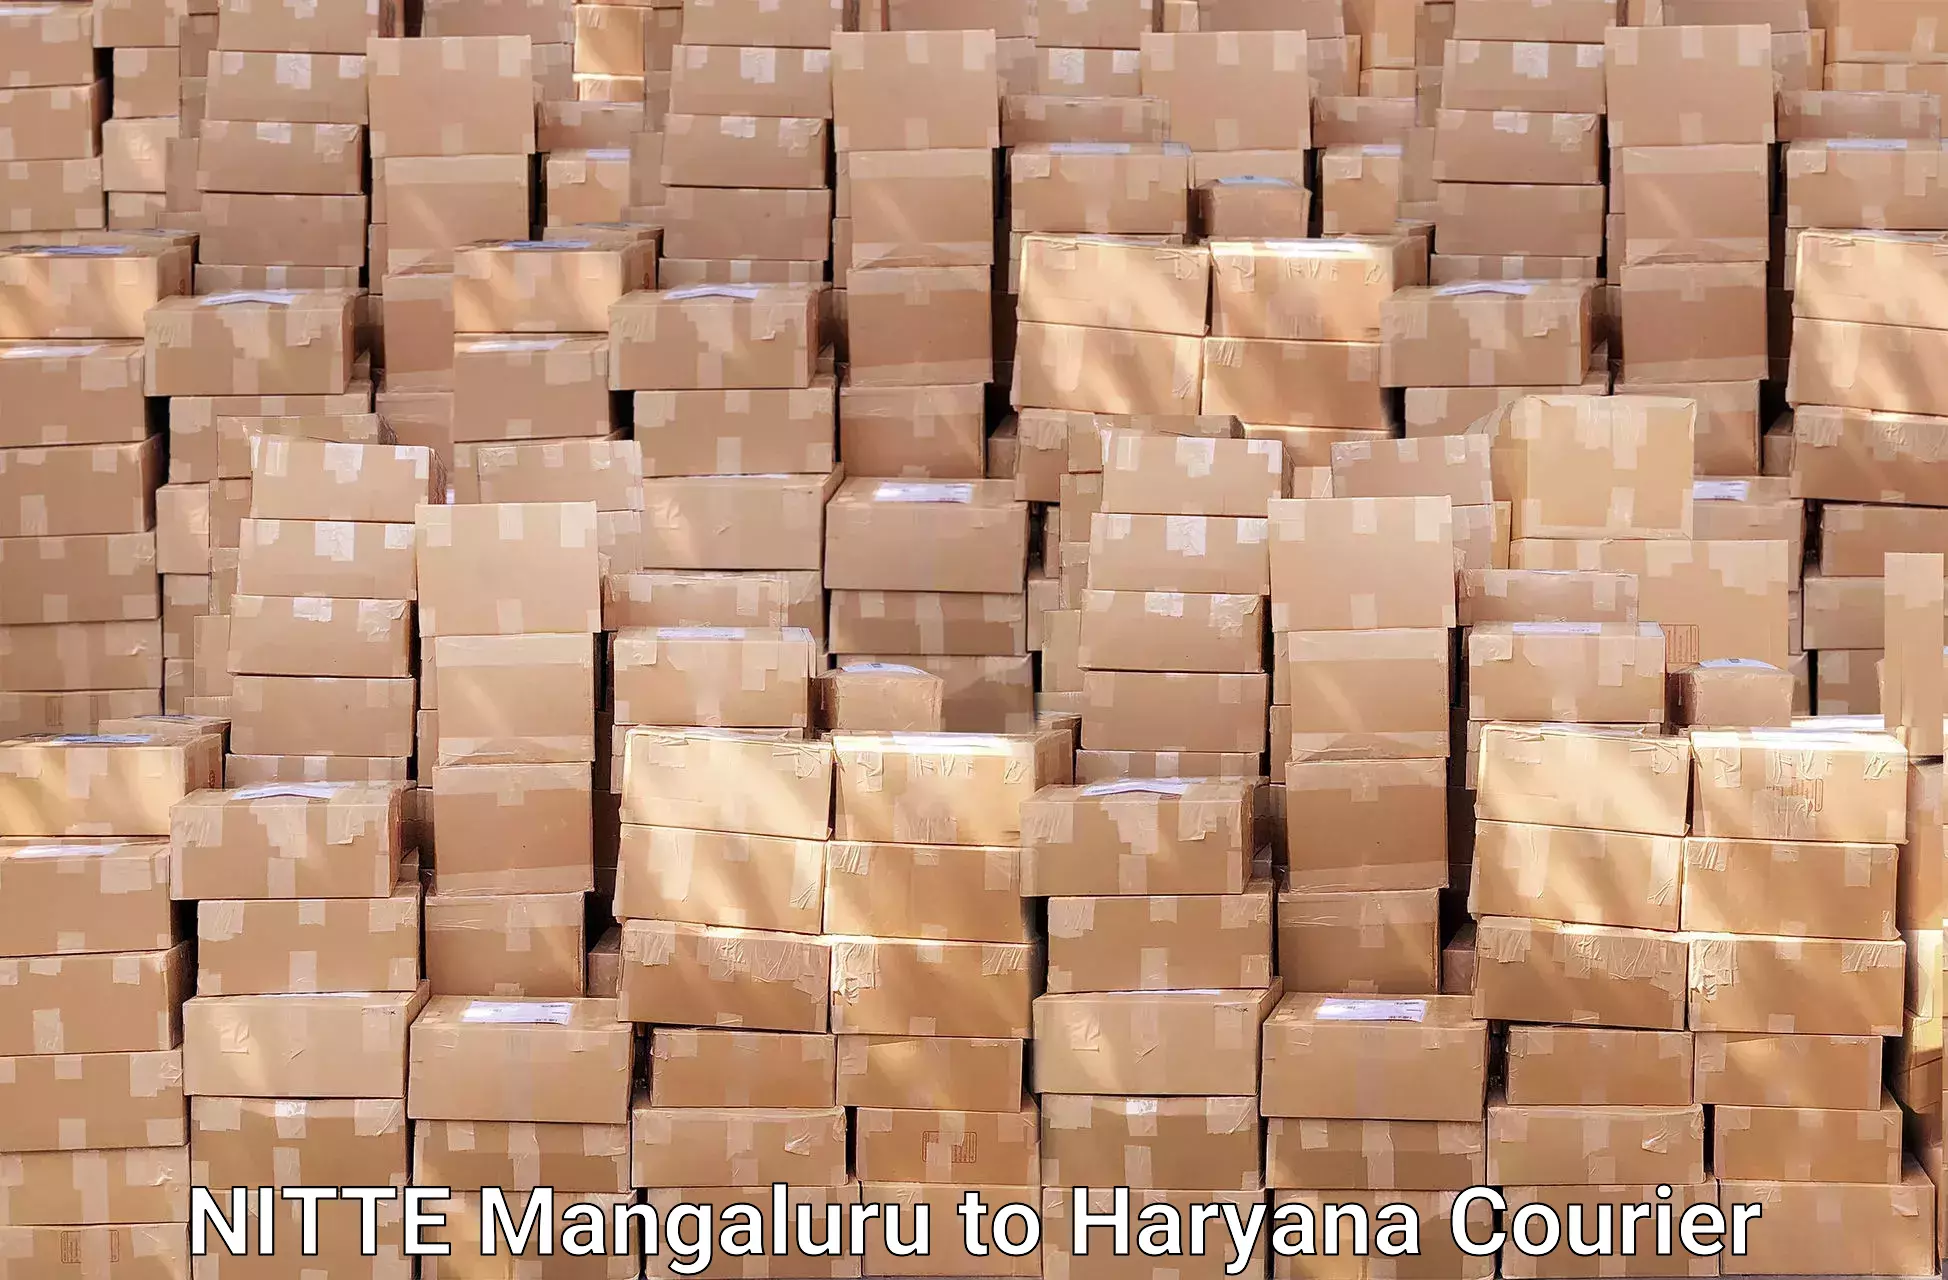 Specialized moving company NITTE Mangaluru to Haryana